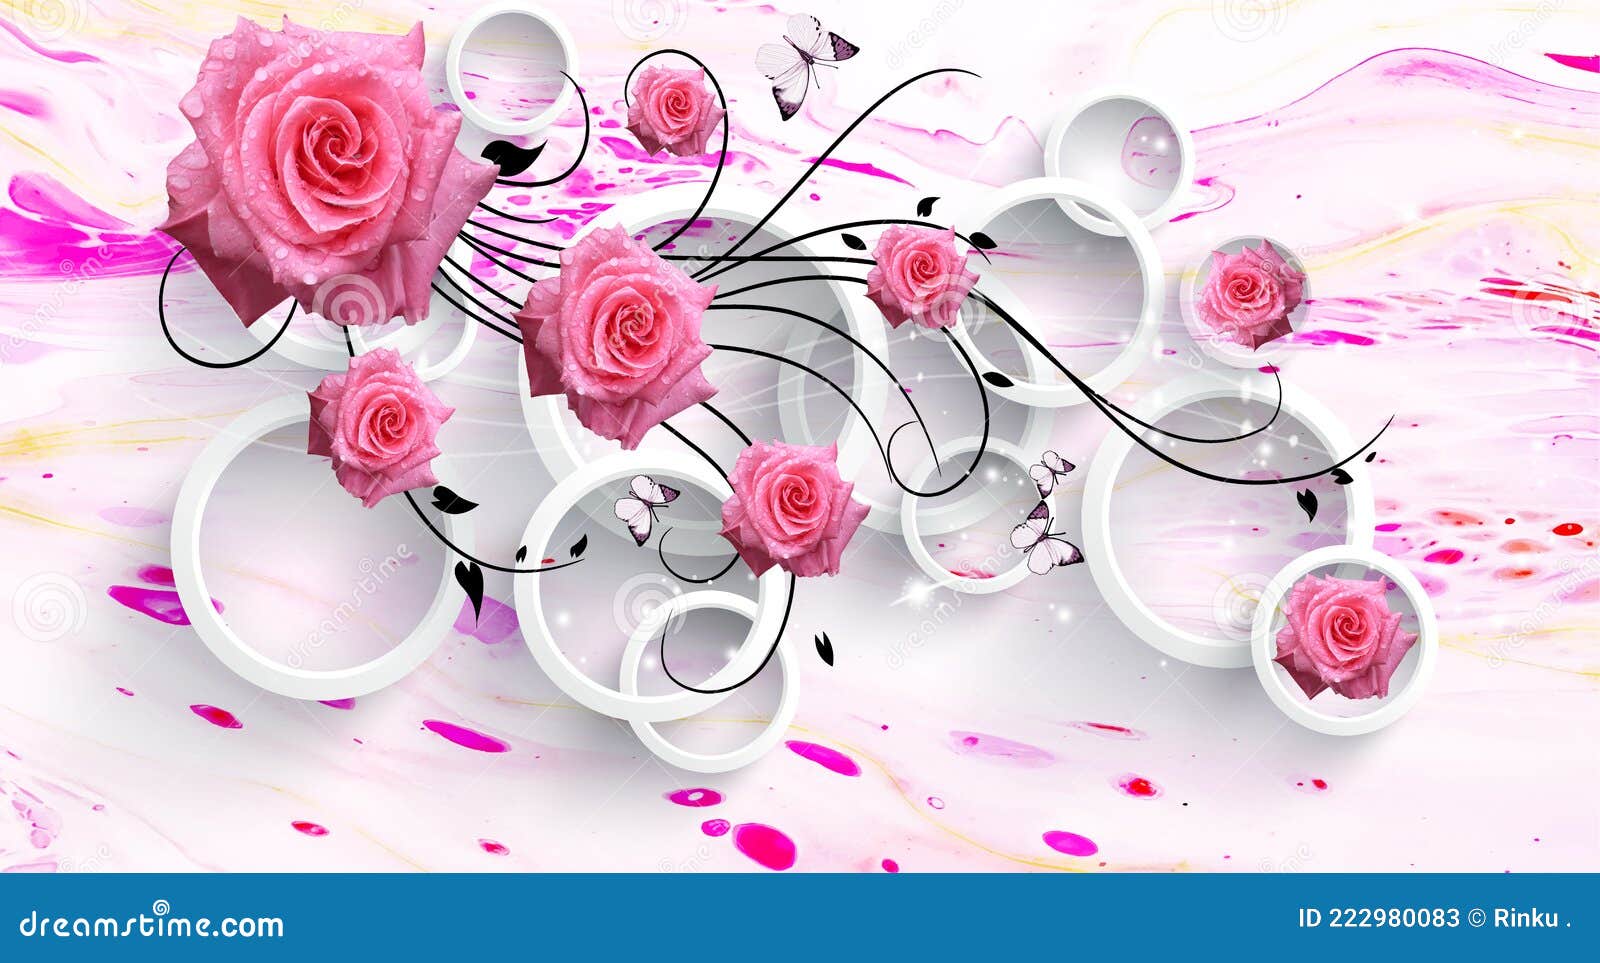 3D Illustration of Beautiful Pink Rose Flowers 3d Background 3D Wallpaper  Stock Illustration - Illustration of printing, interior: 222980083